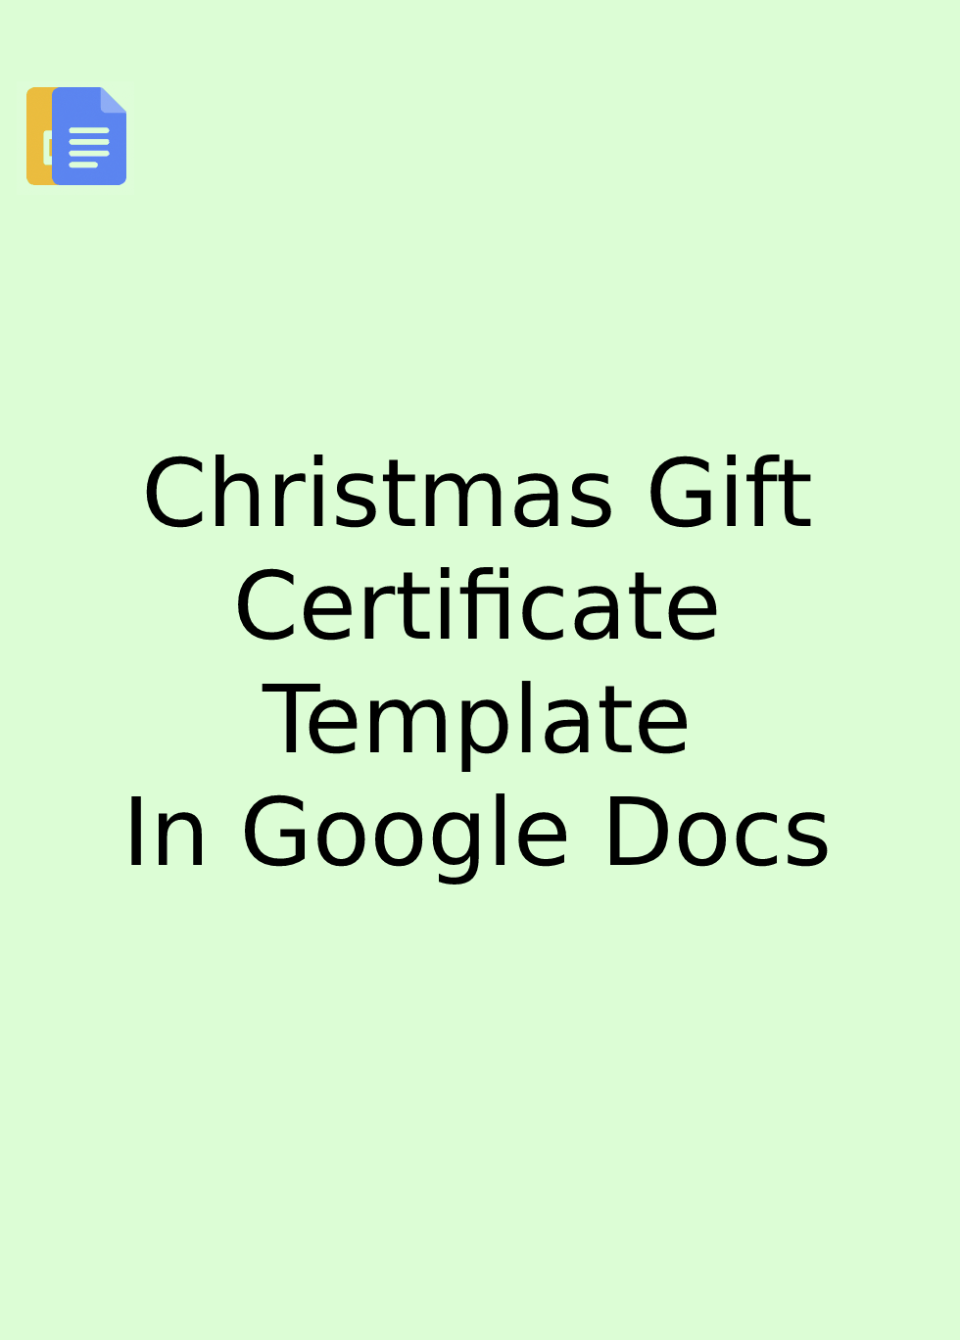 Christmas Gift Certificate Template Google Docs